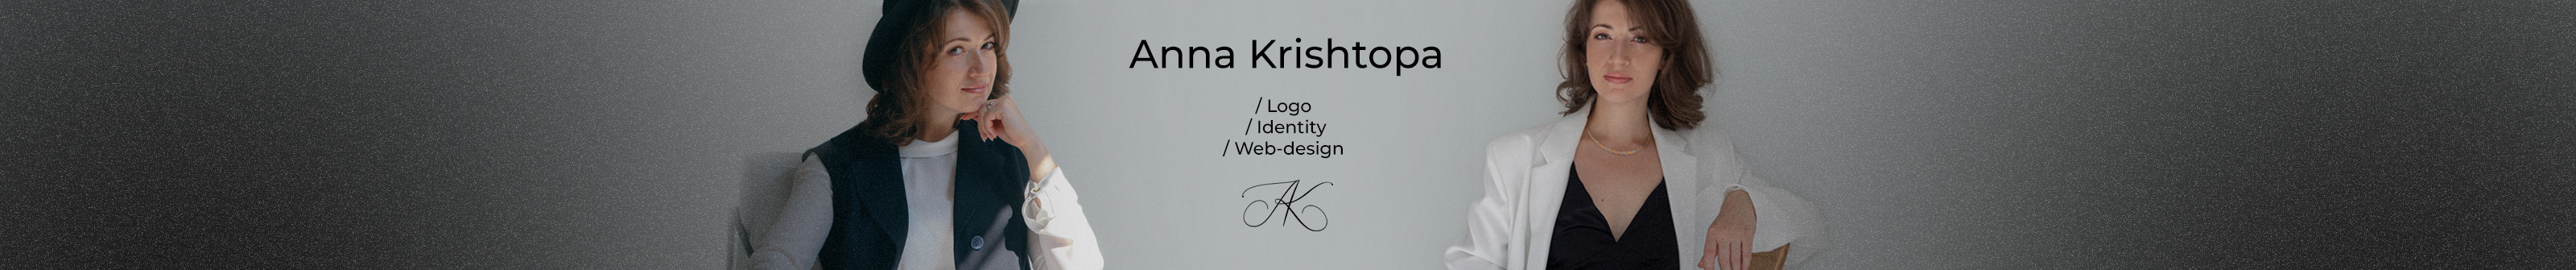 Баннер профиля Anna Krishtopa